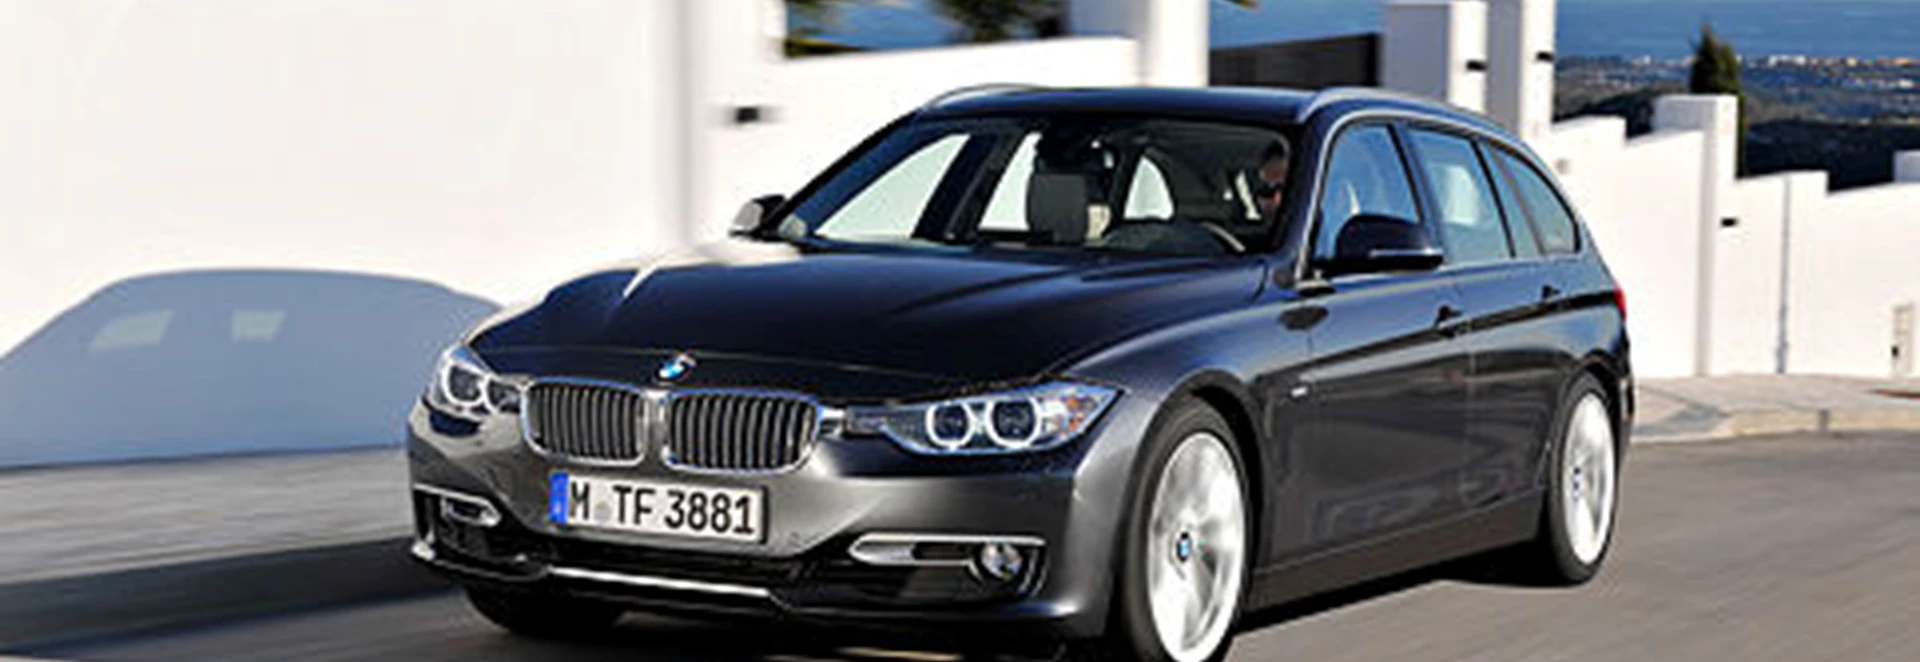 BMW 330d Luxury Touring 